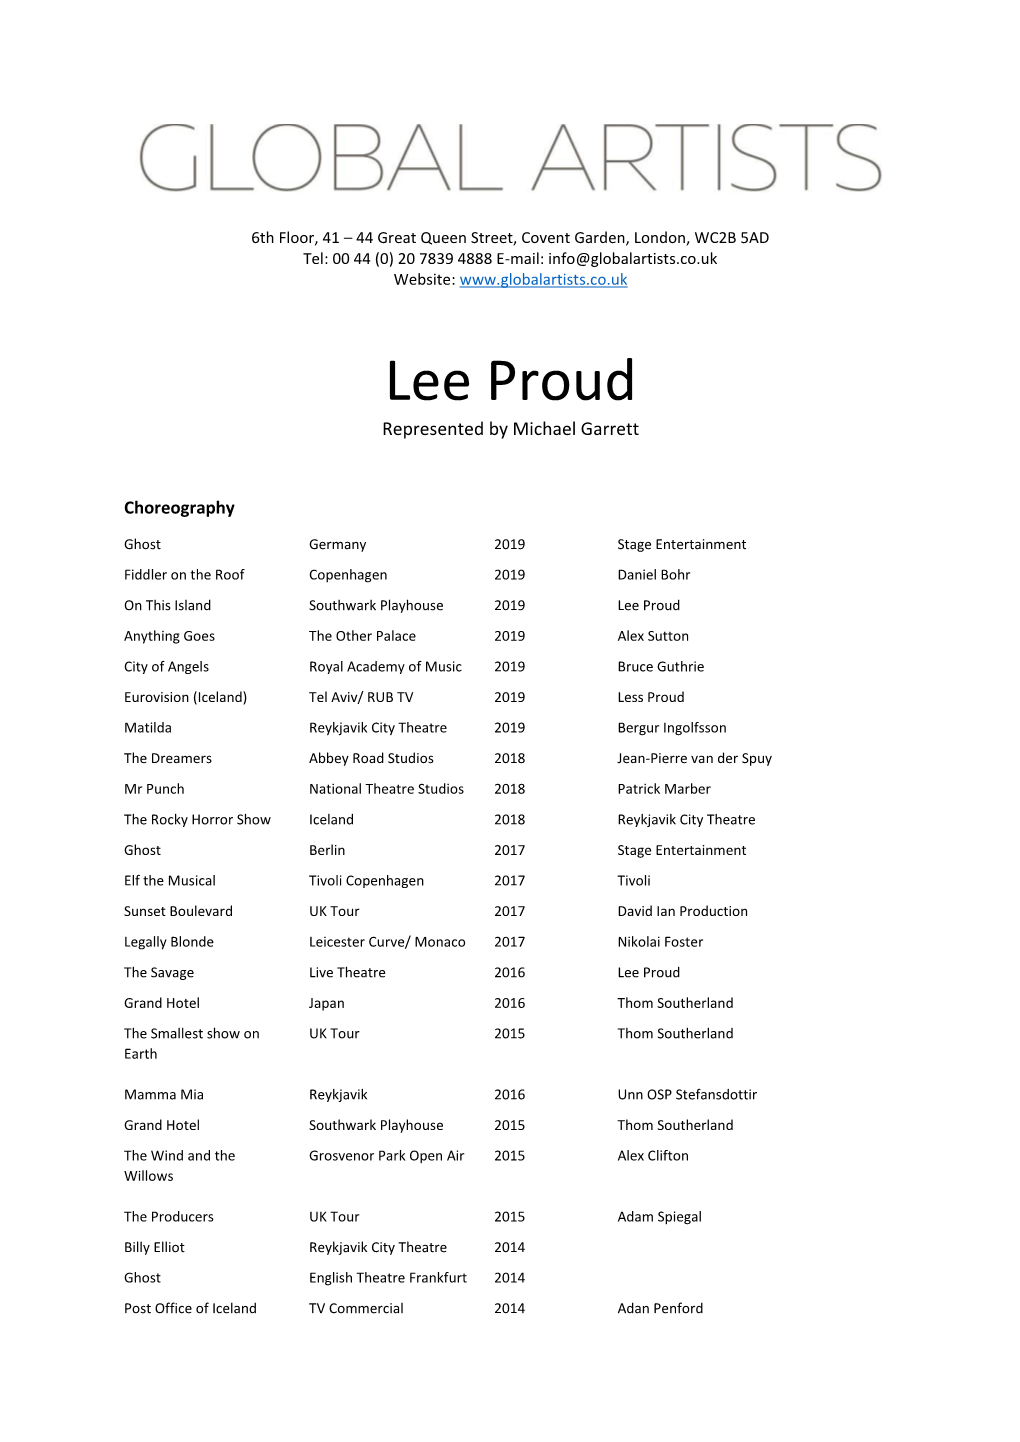 Lee Proud Represented by Michael Garrett